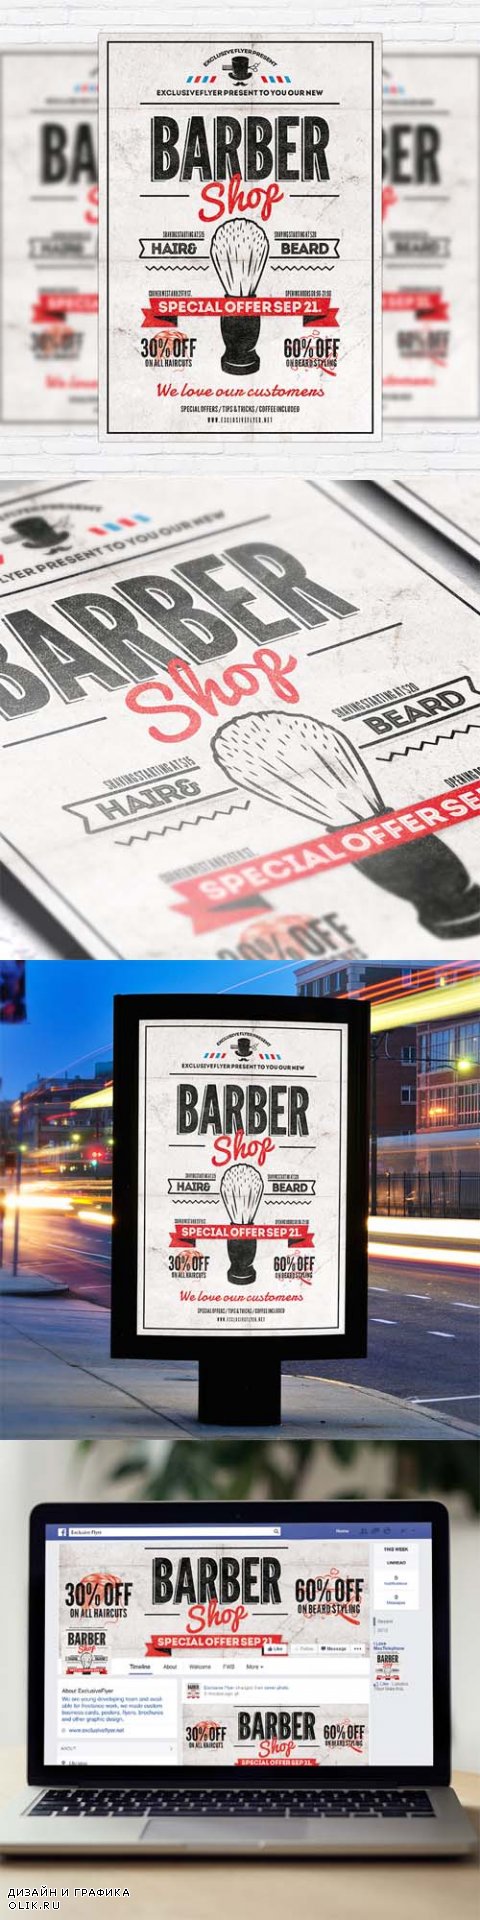 Flyer Template - Barber Shop Vol 2 + Facebook Cover